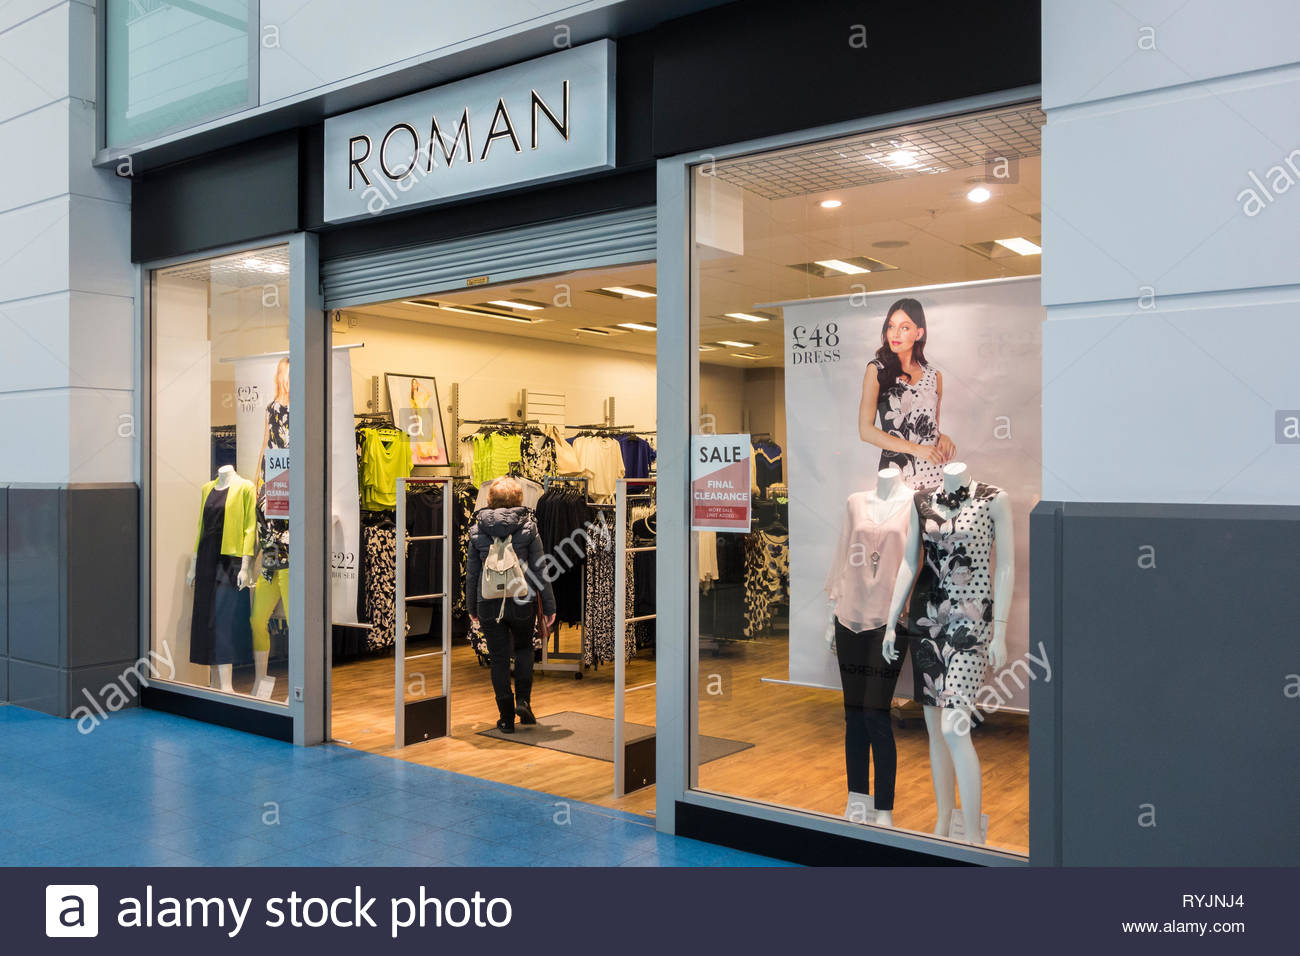 roman clothes shop near me